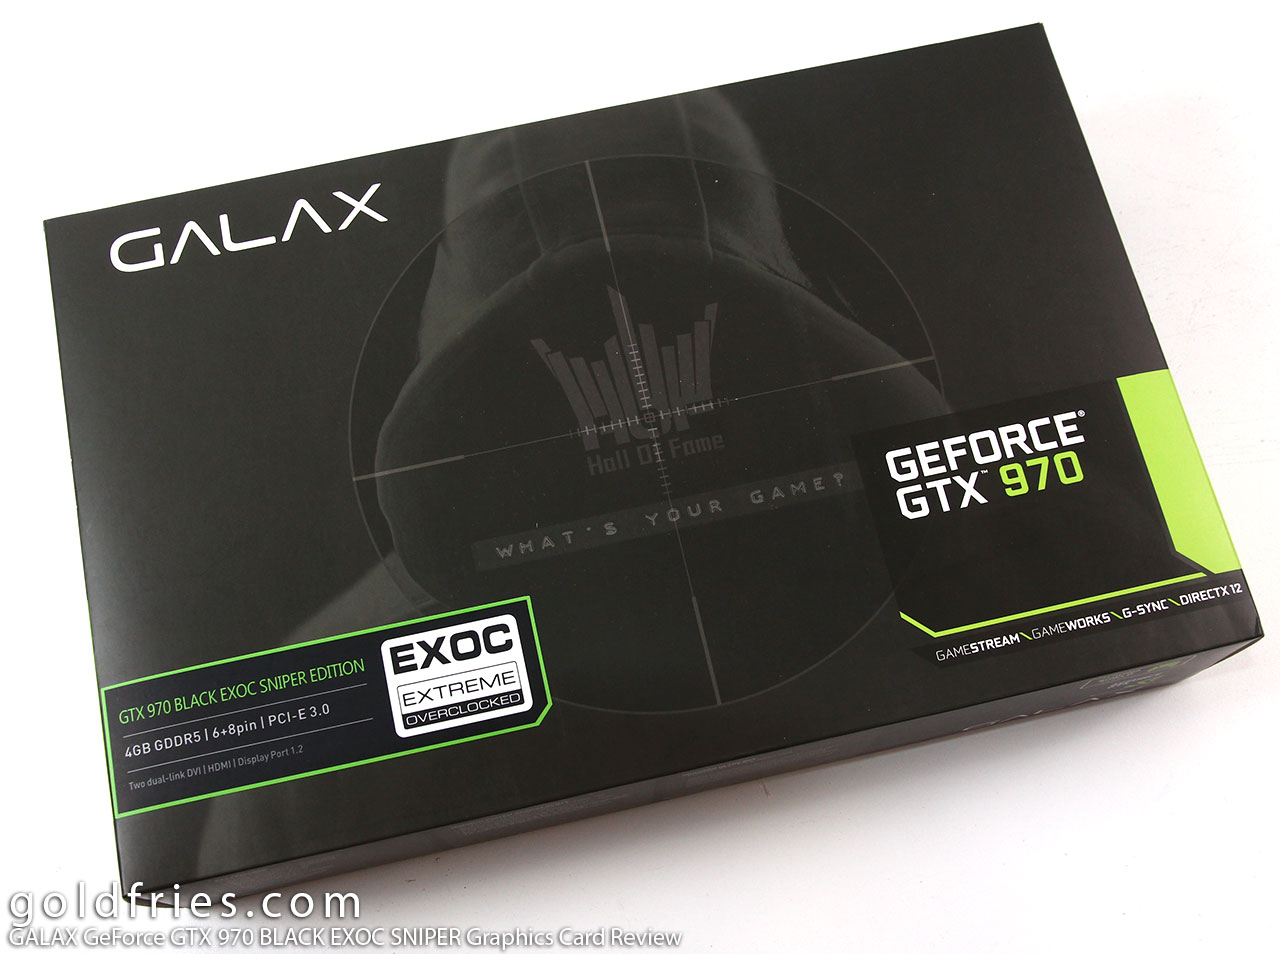 GALAX GeForce GTX 970 BLACK EXOC SNIPER Graphics Card Review